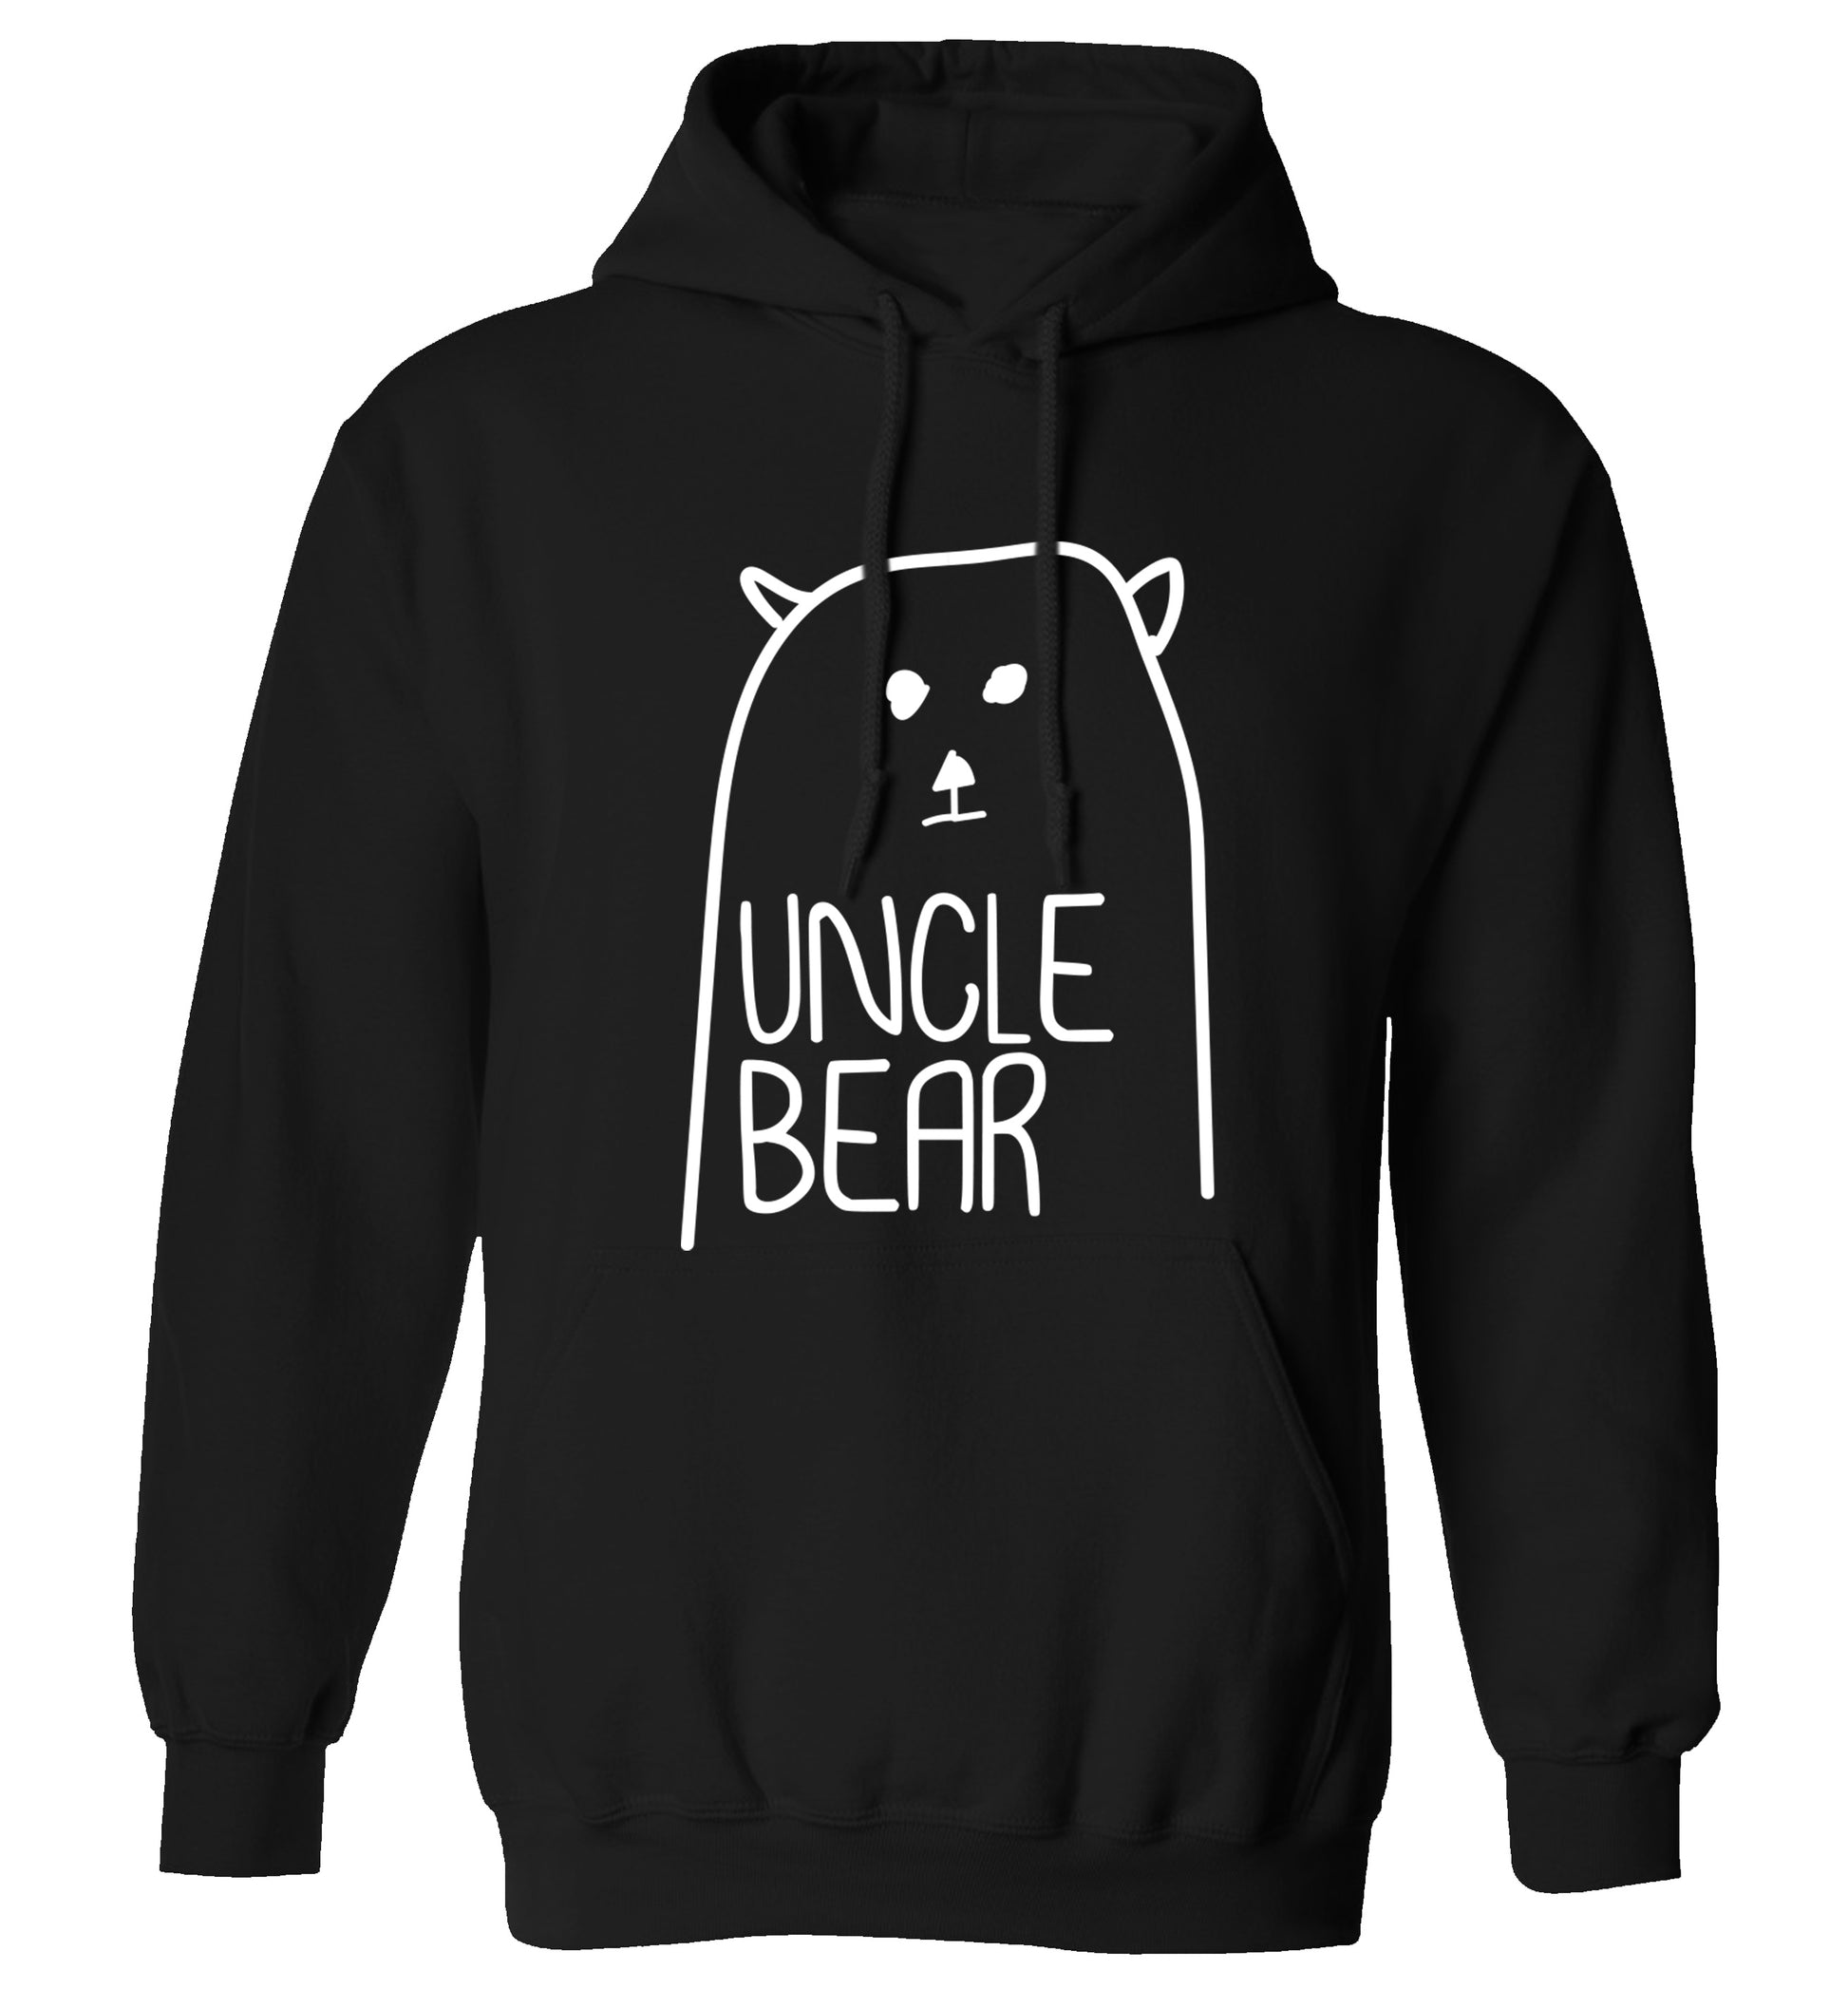 Uncle bear adults unisex black hoodie 2XL